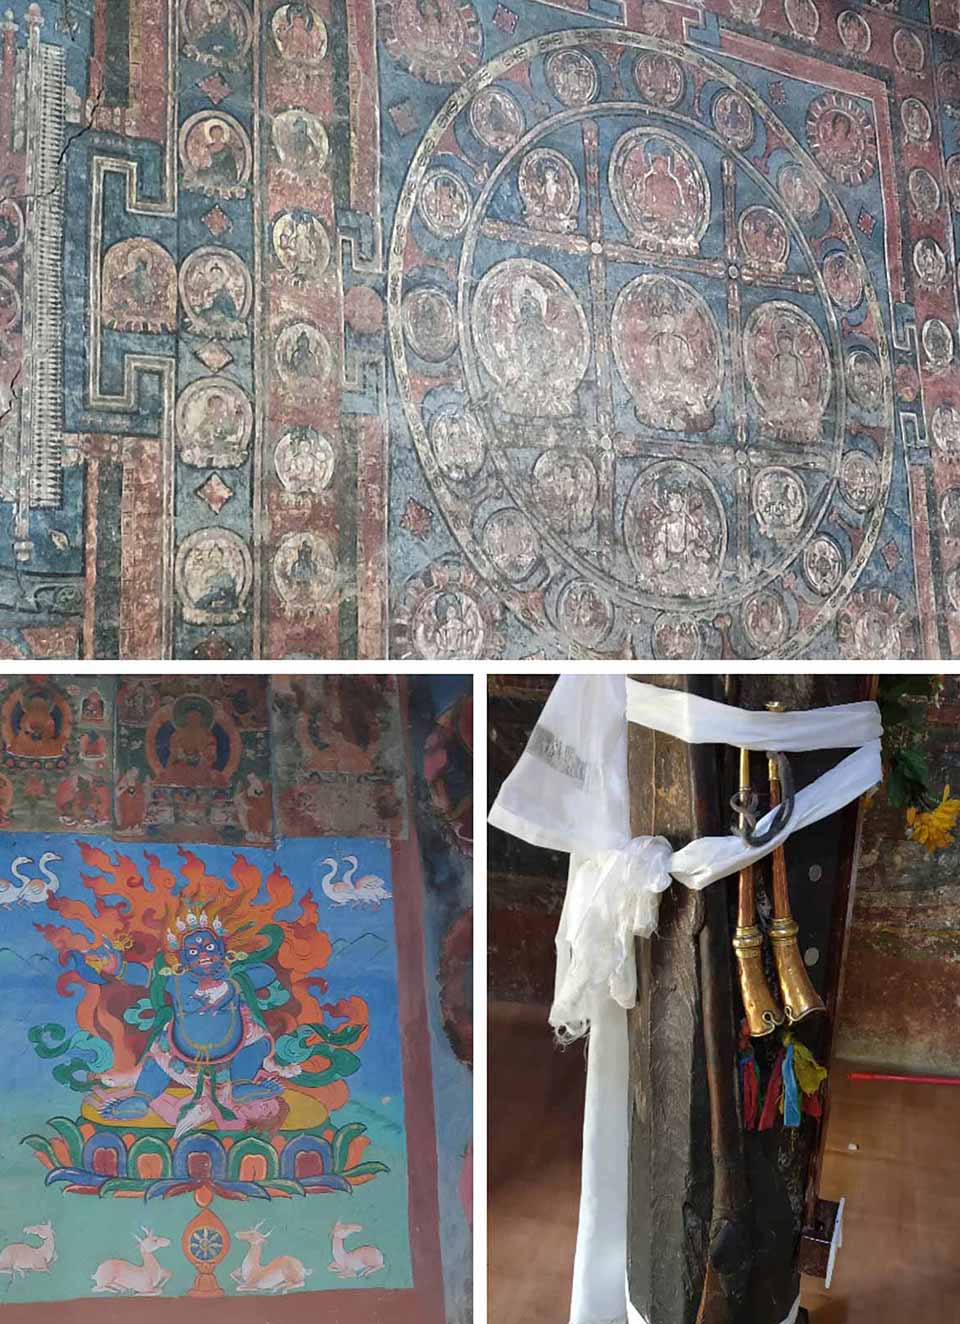 Budhist Artefacts in Monasteries